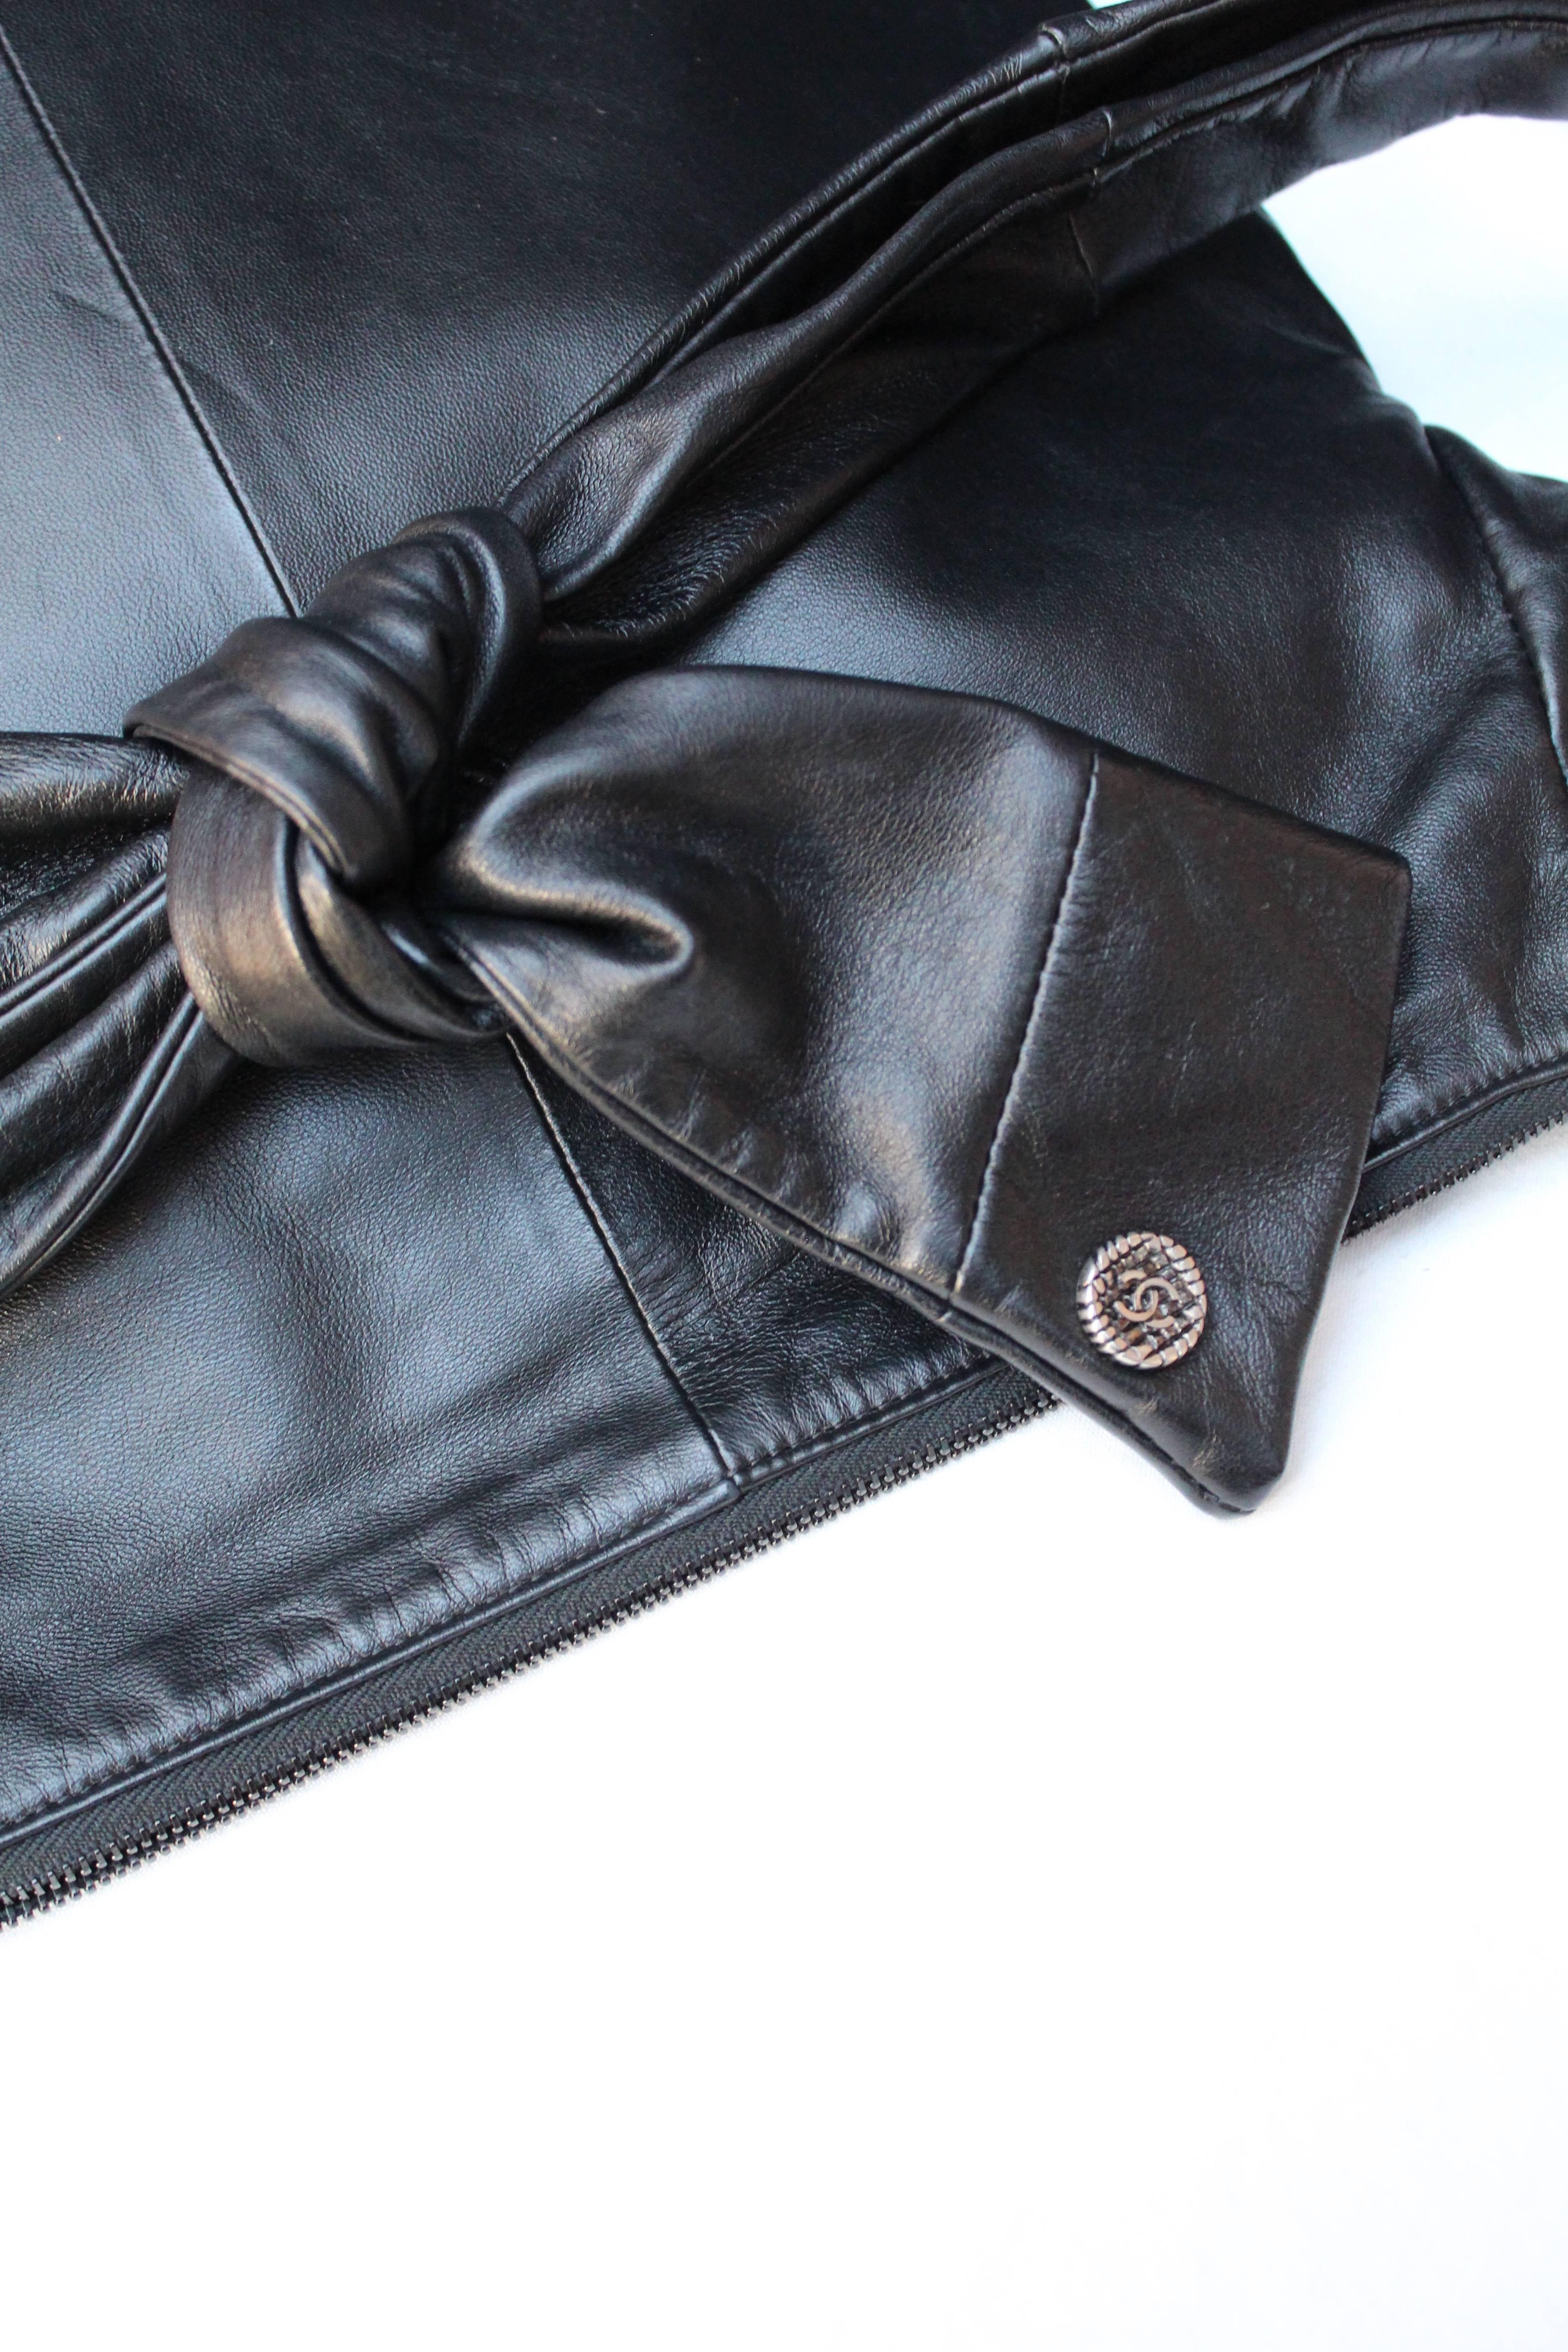 Chanel “Girl” black lambskin bag, Circa 2015  For Sale 4